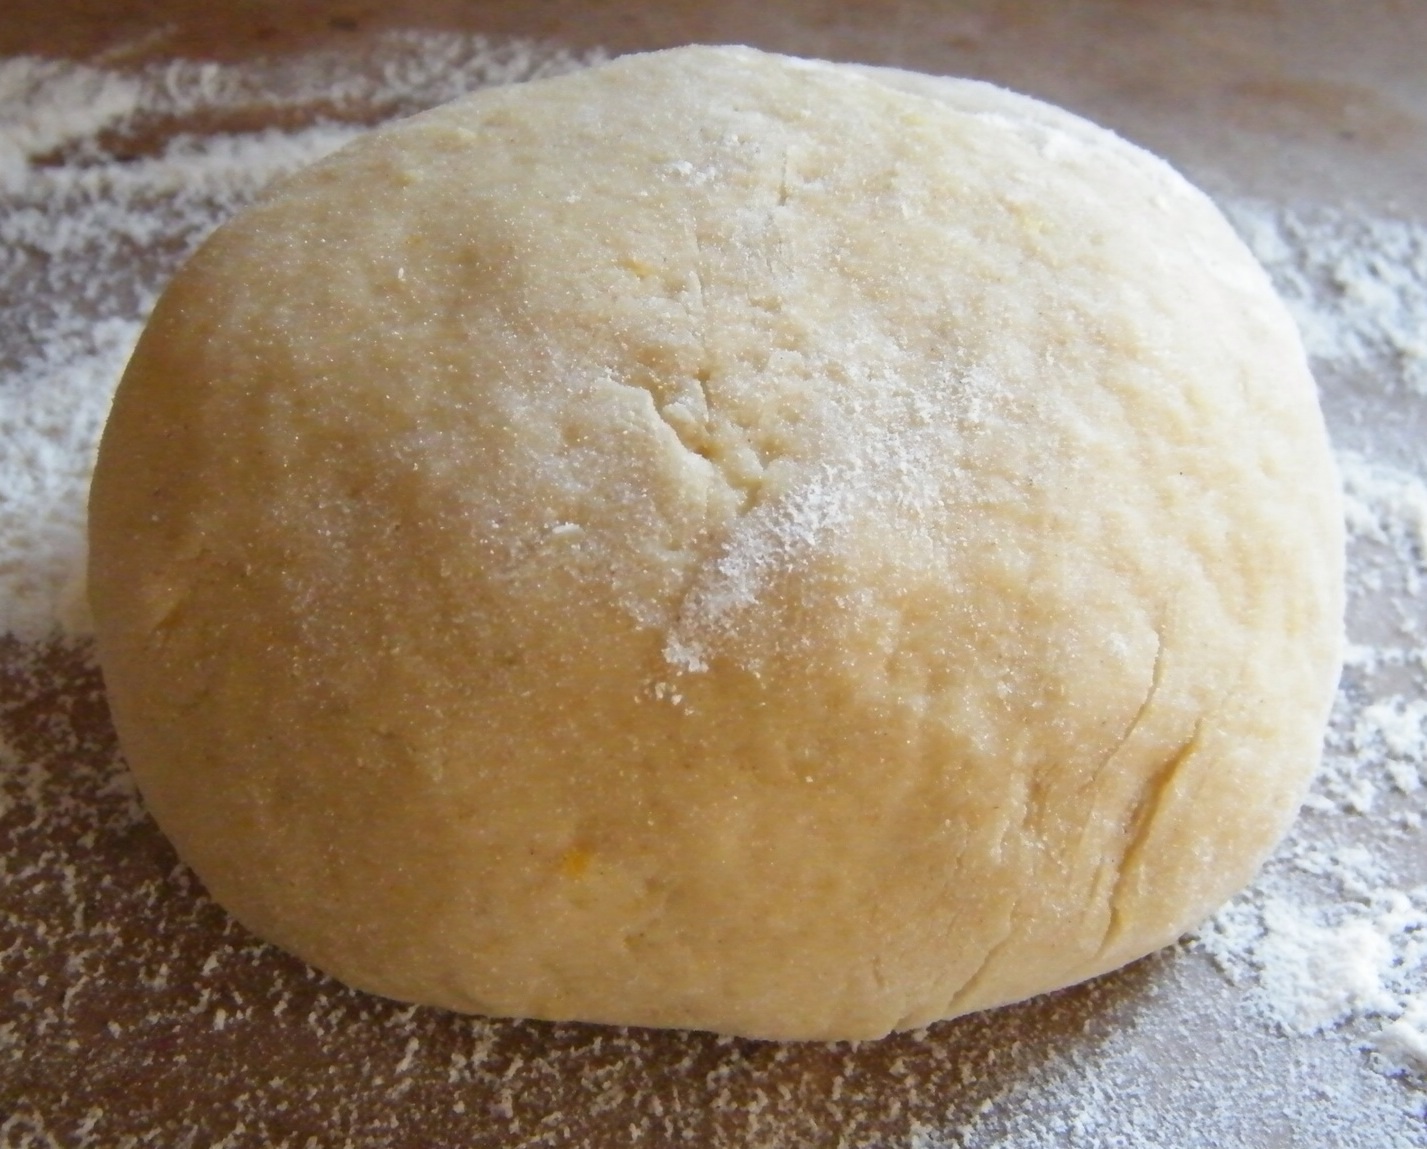 Biscuit dough